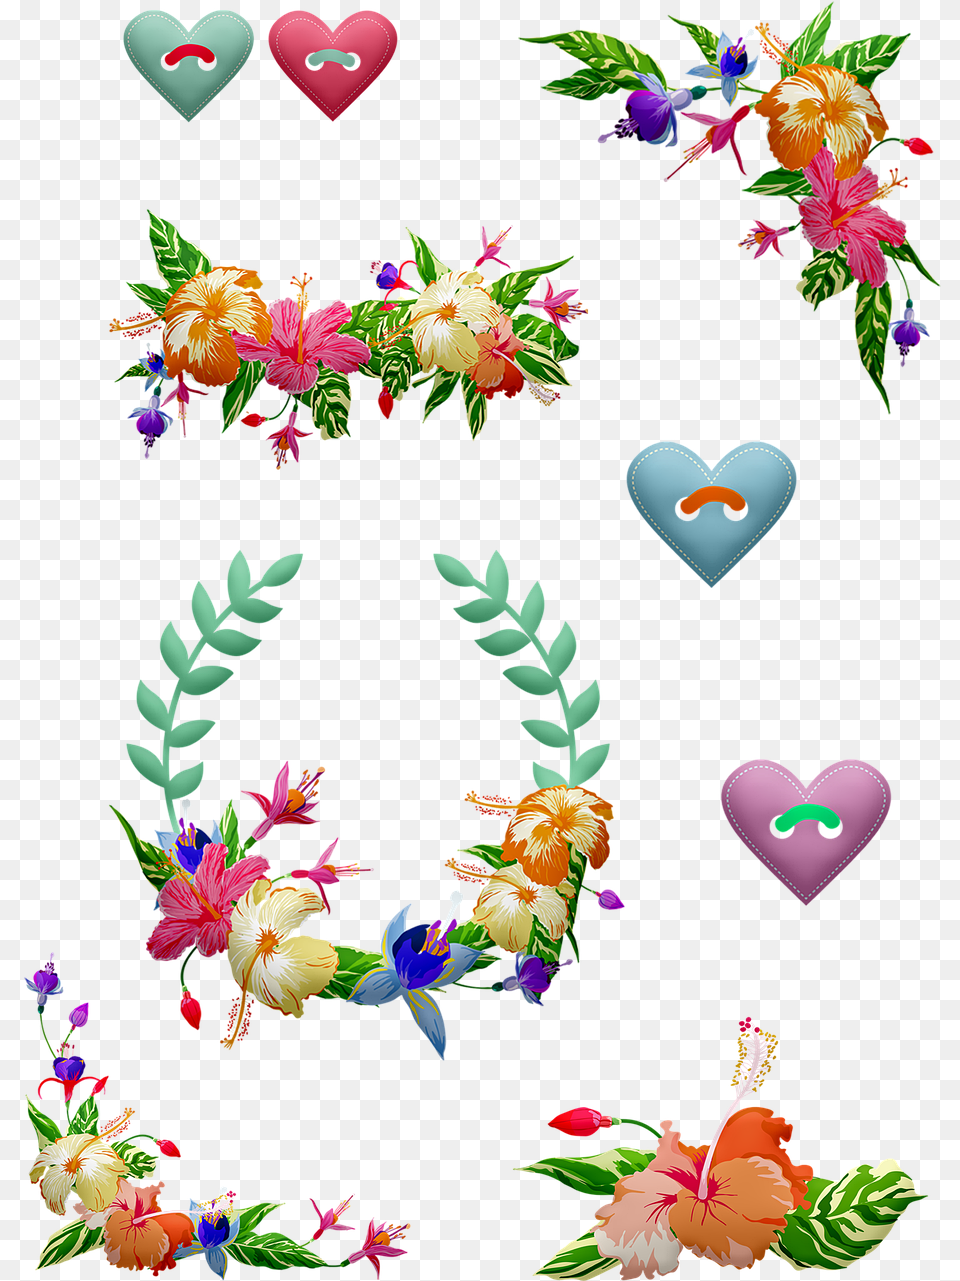 Tropical Flowers Wreaths Floral Image On Pixabay Flores Tropicales En, Art, Graphics, Floral Design, Pattern Free Transparent Png